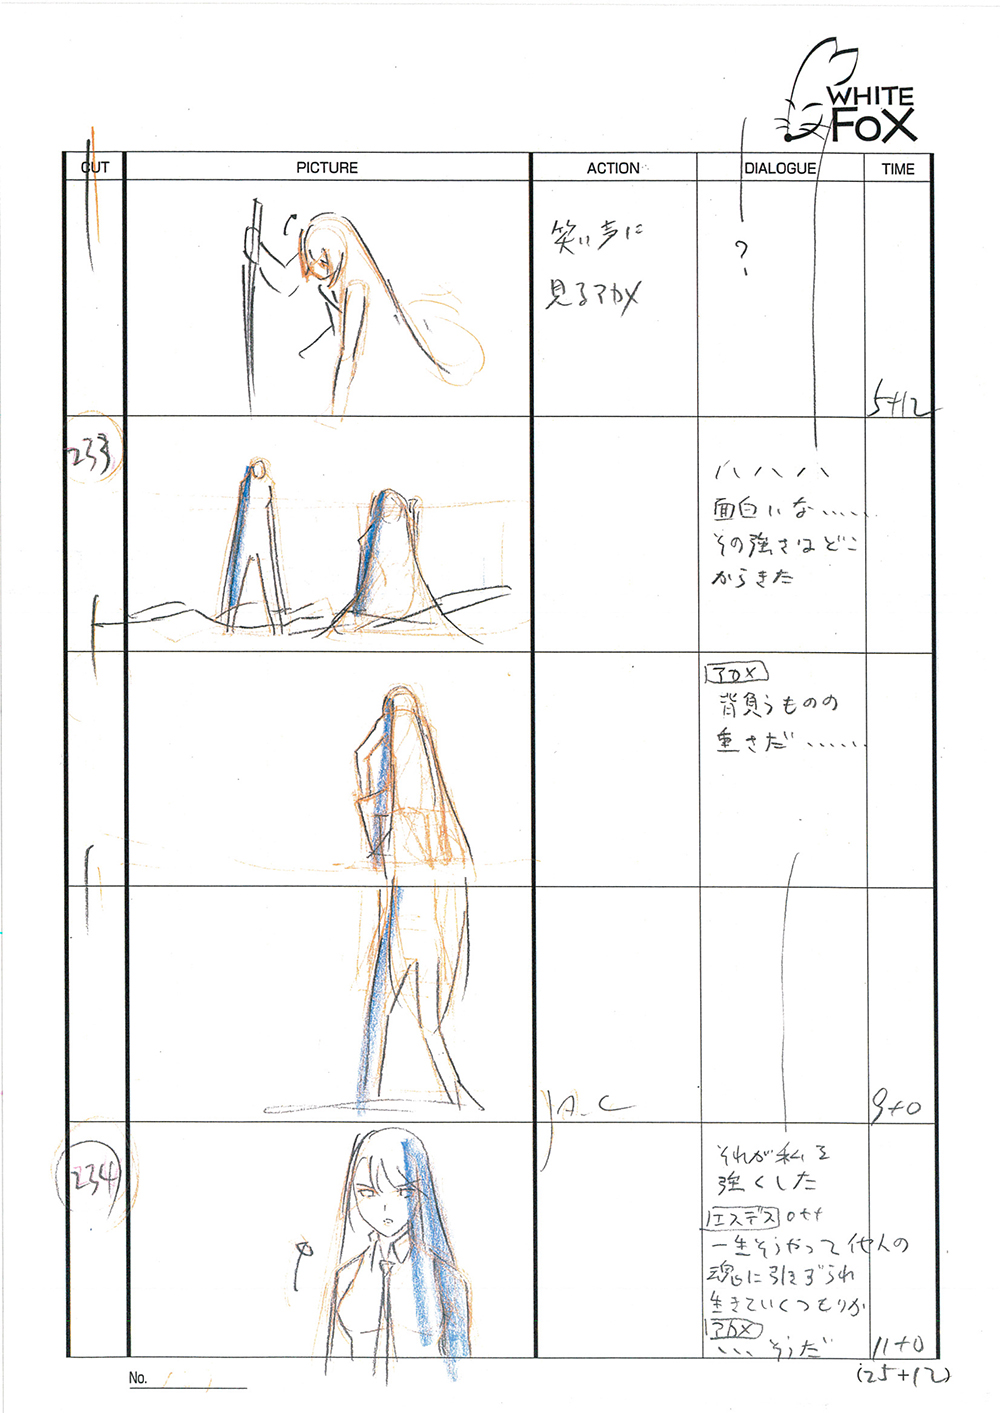 Akame ga Kill Episode 24 Storyboard Leak 133